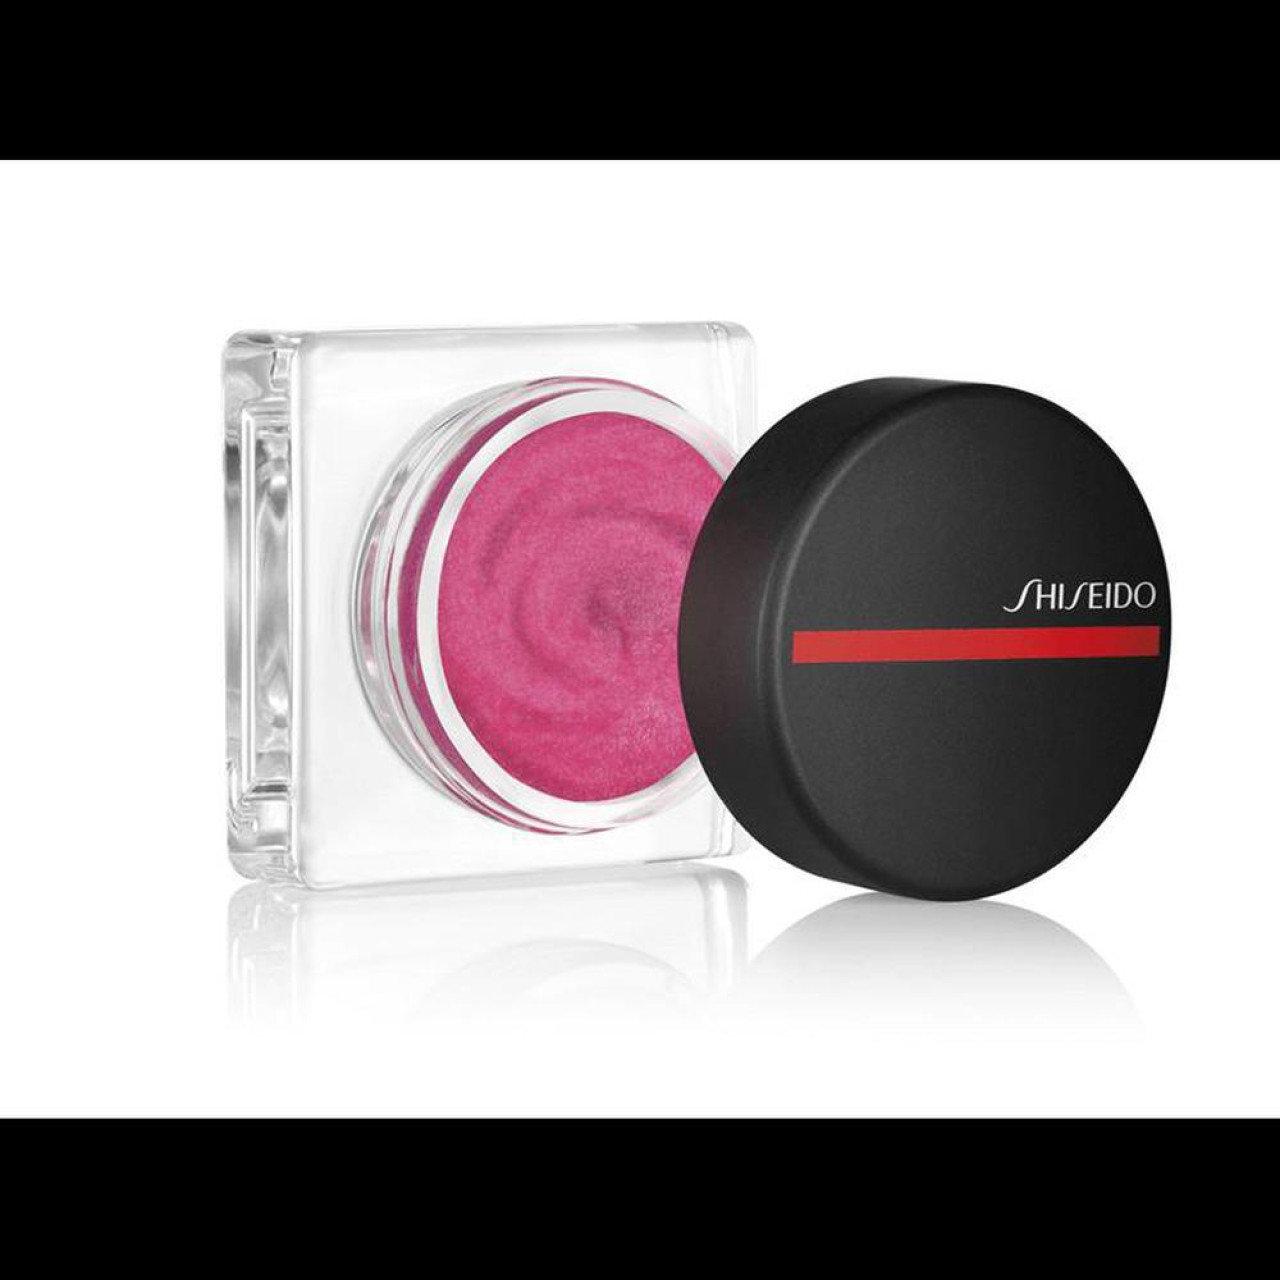 Shiseido minimalist whipped powder blush 08